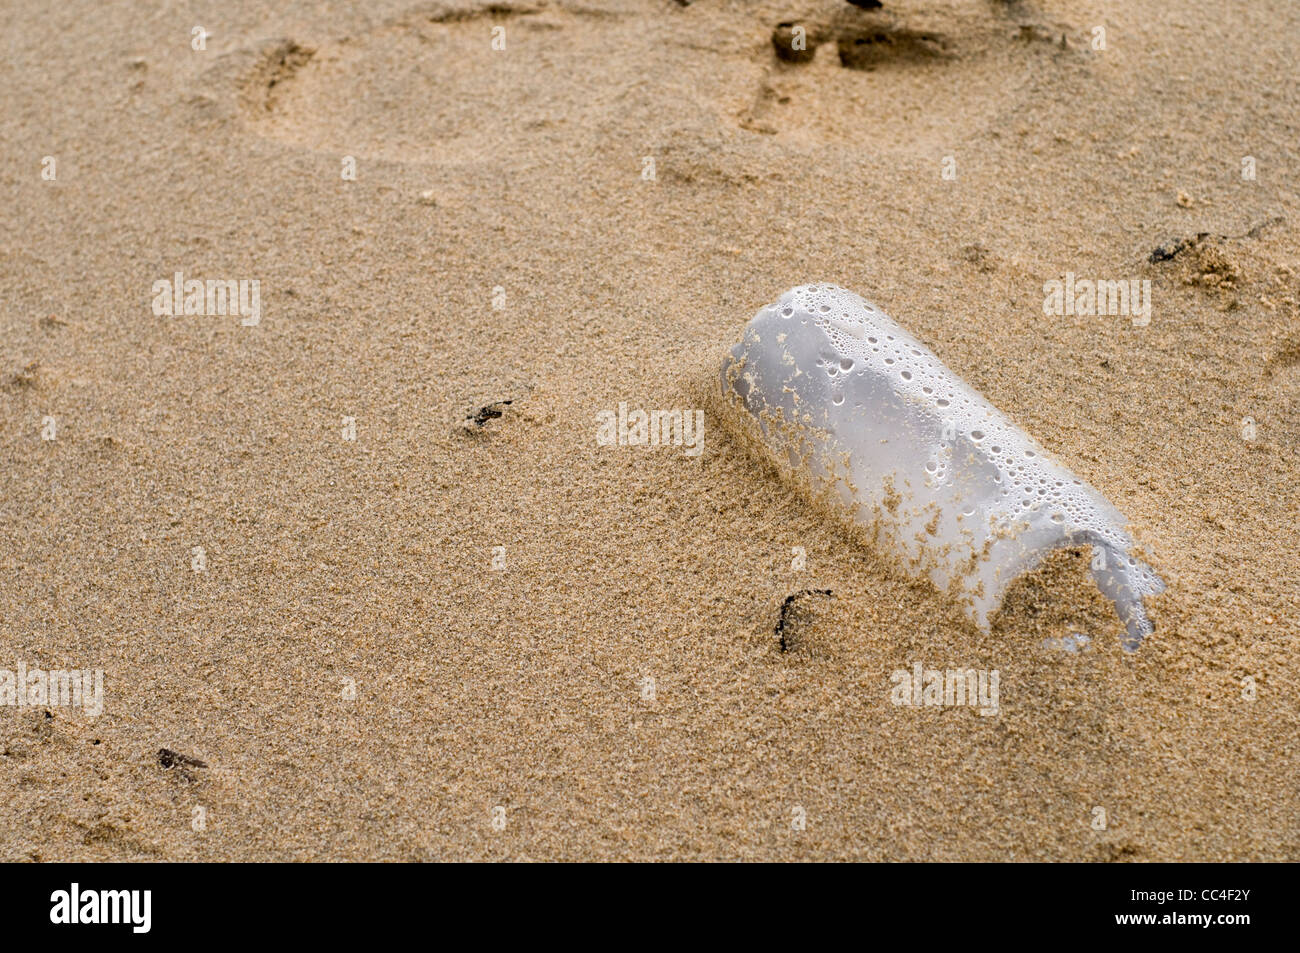 A plastic bottle polluting a sandy beach Stock Photo